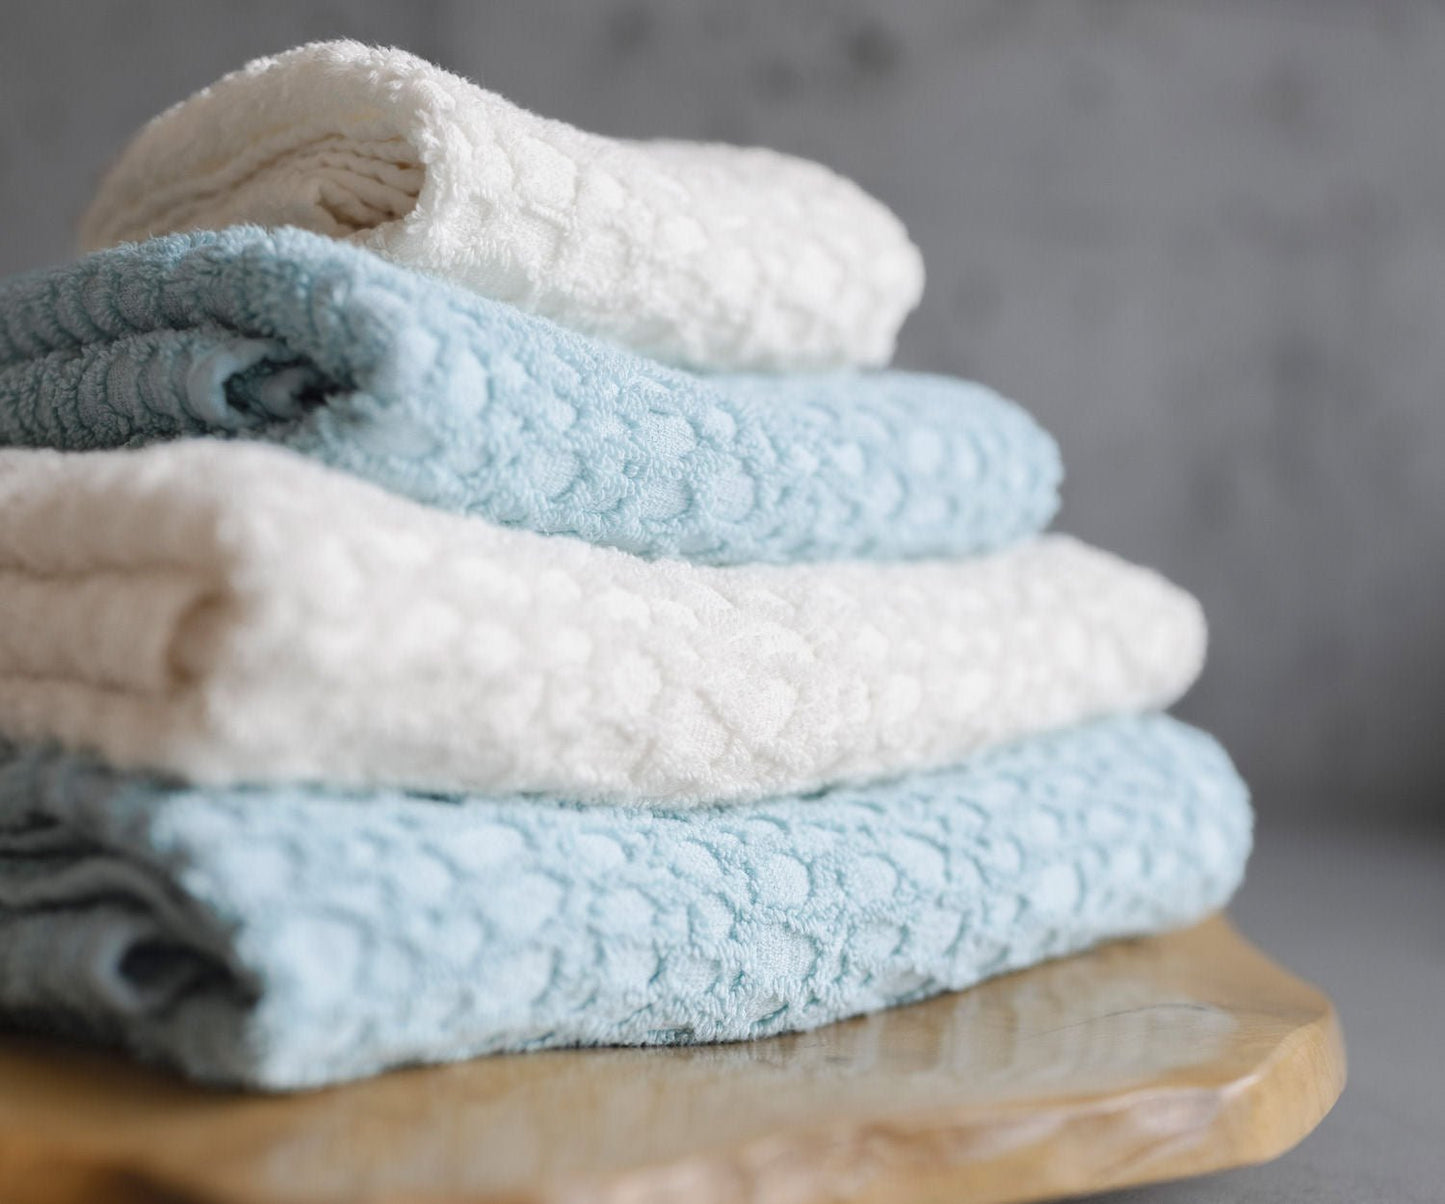 Abyss & Habidecor 100% Giza Egyptian Cotton Towels LODGE - |VESIMI Design| Luxury Bathrooms and Home Decor